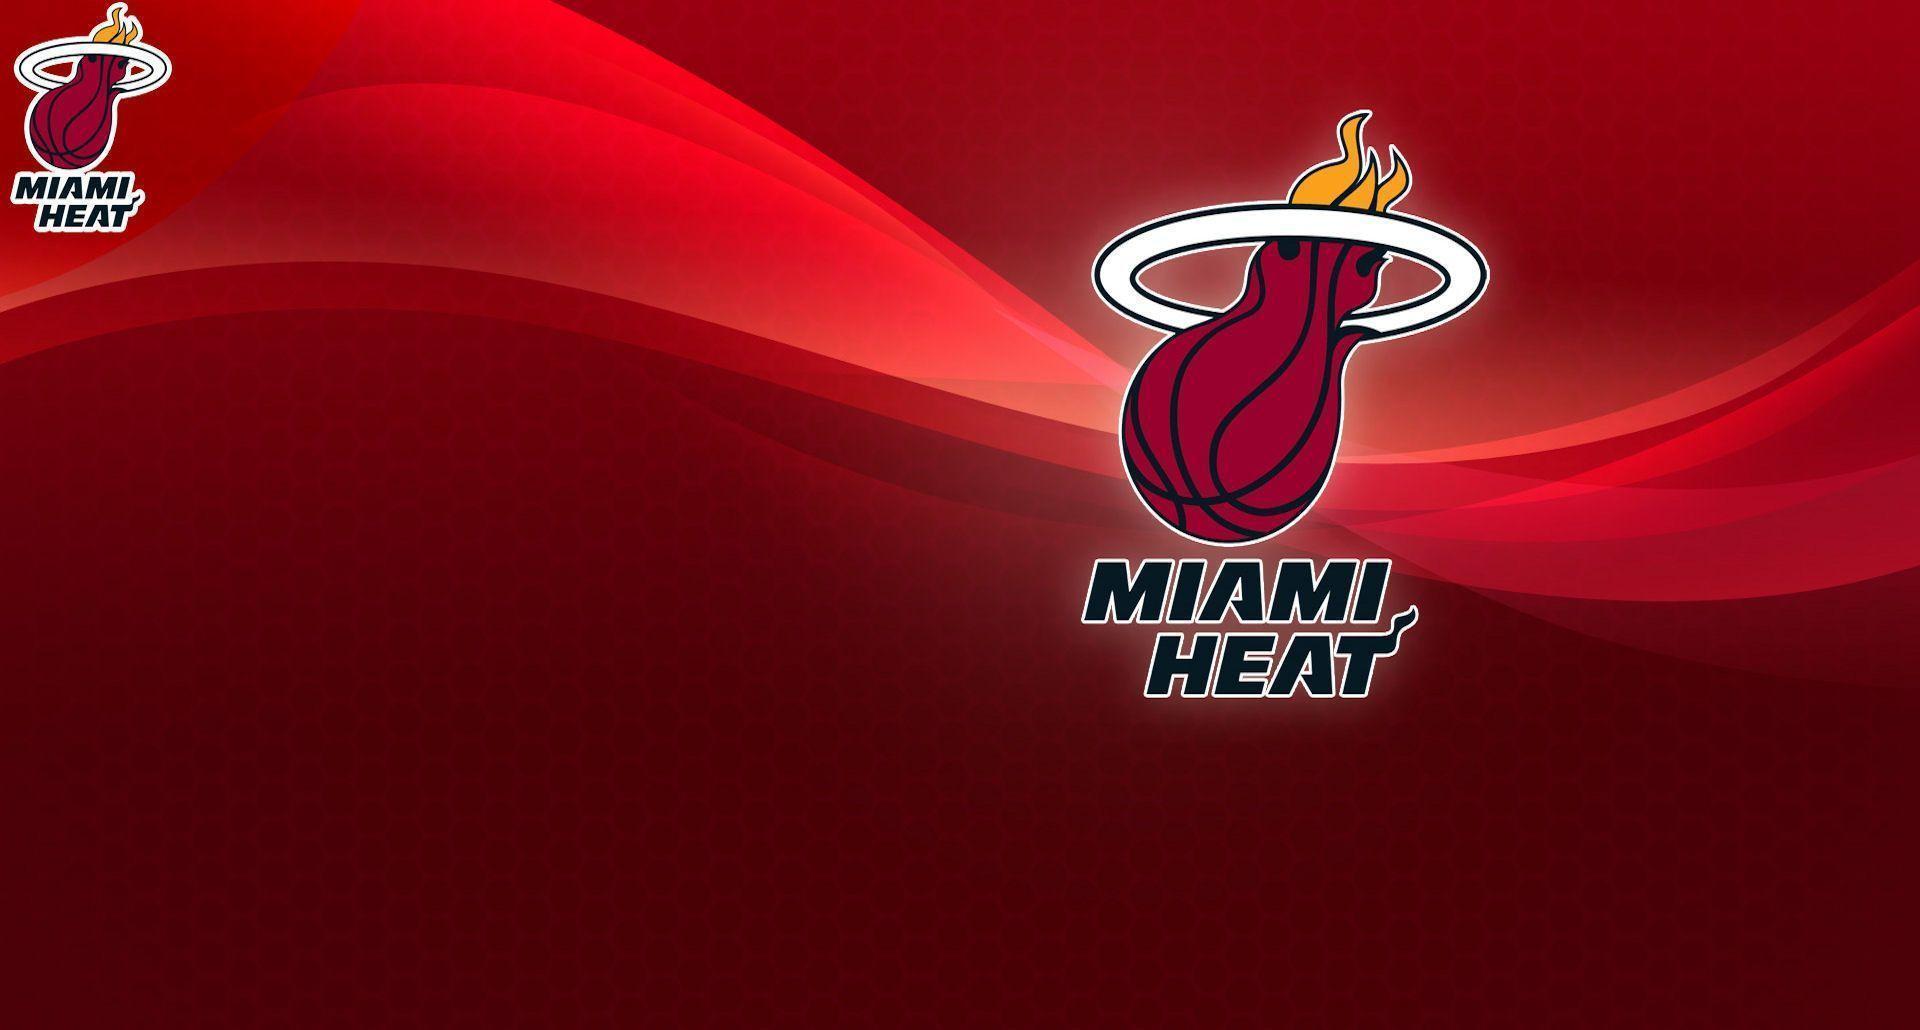 Miami Heat Twitter Background, Miami Heat Twitter Themes